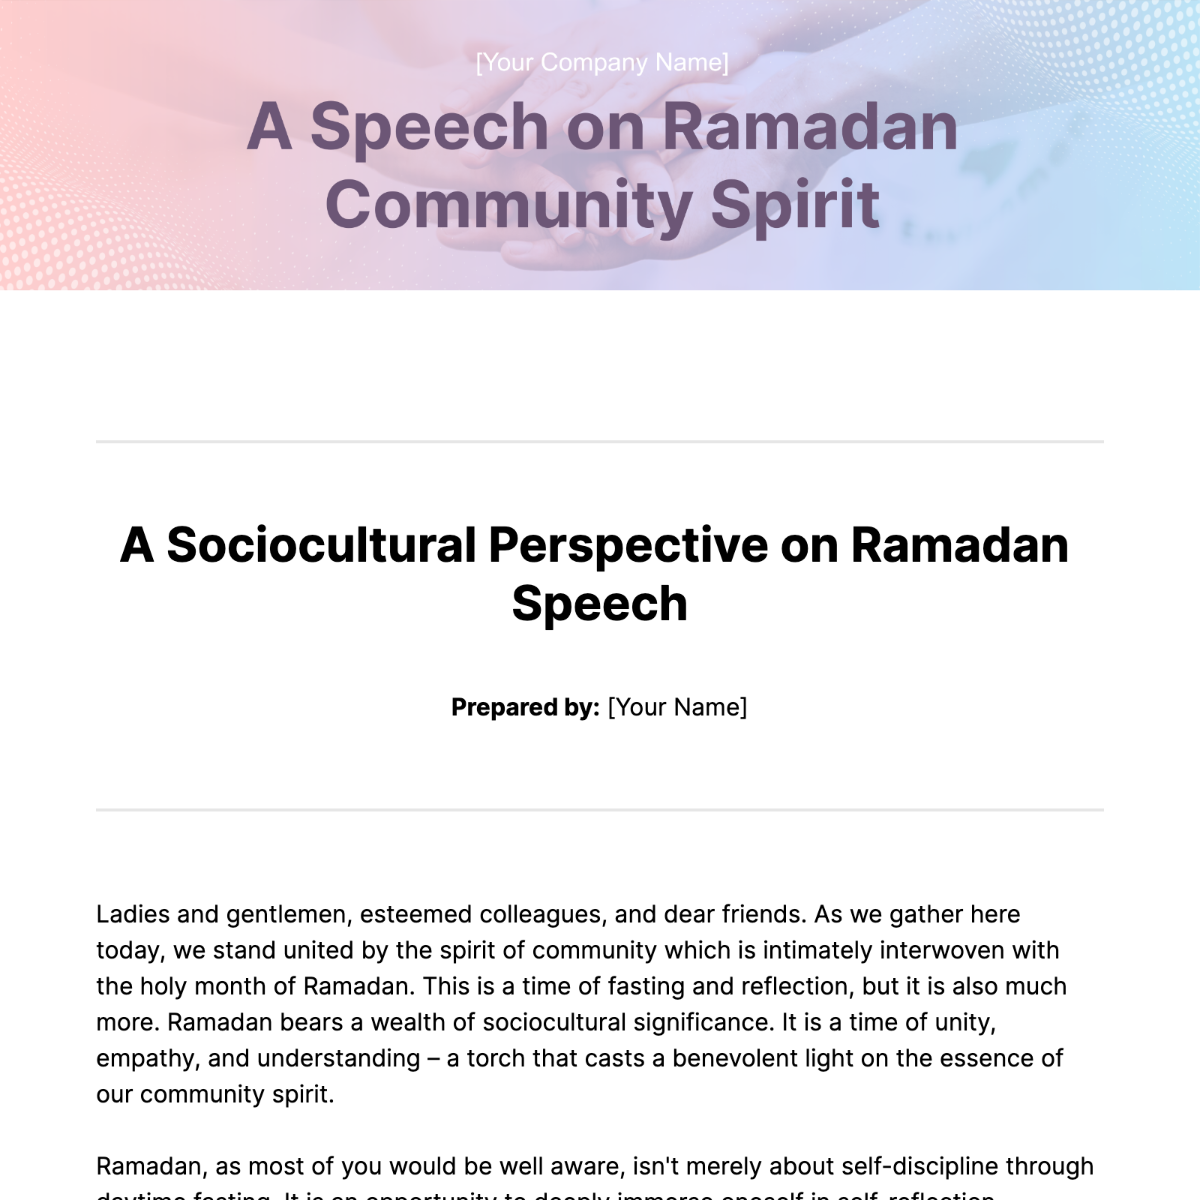 Free Ramadan and Community Spirit: A Sociocultural Perspective Speech Template